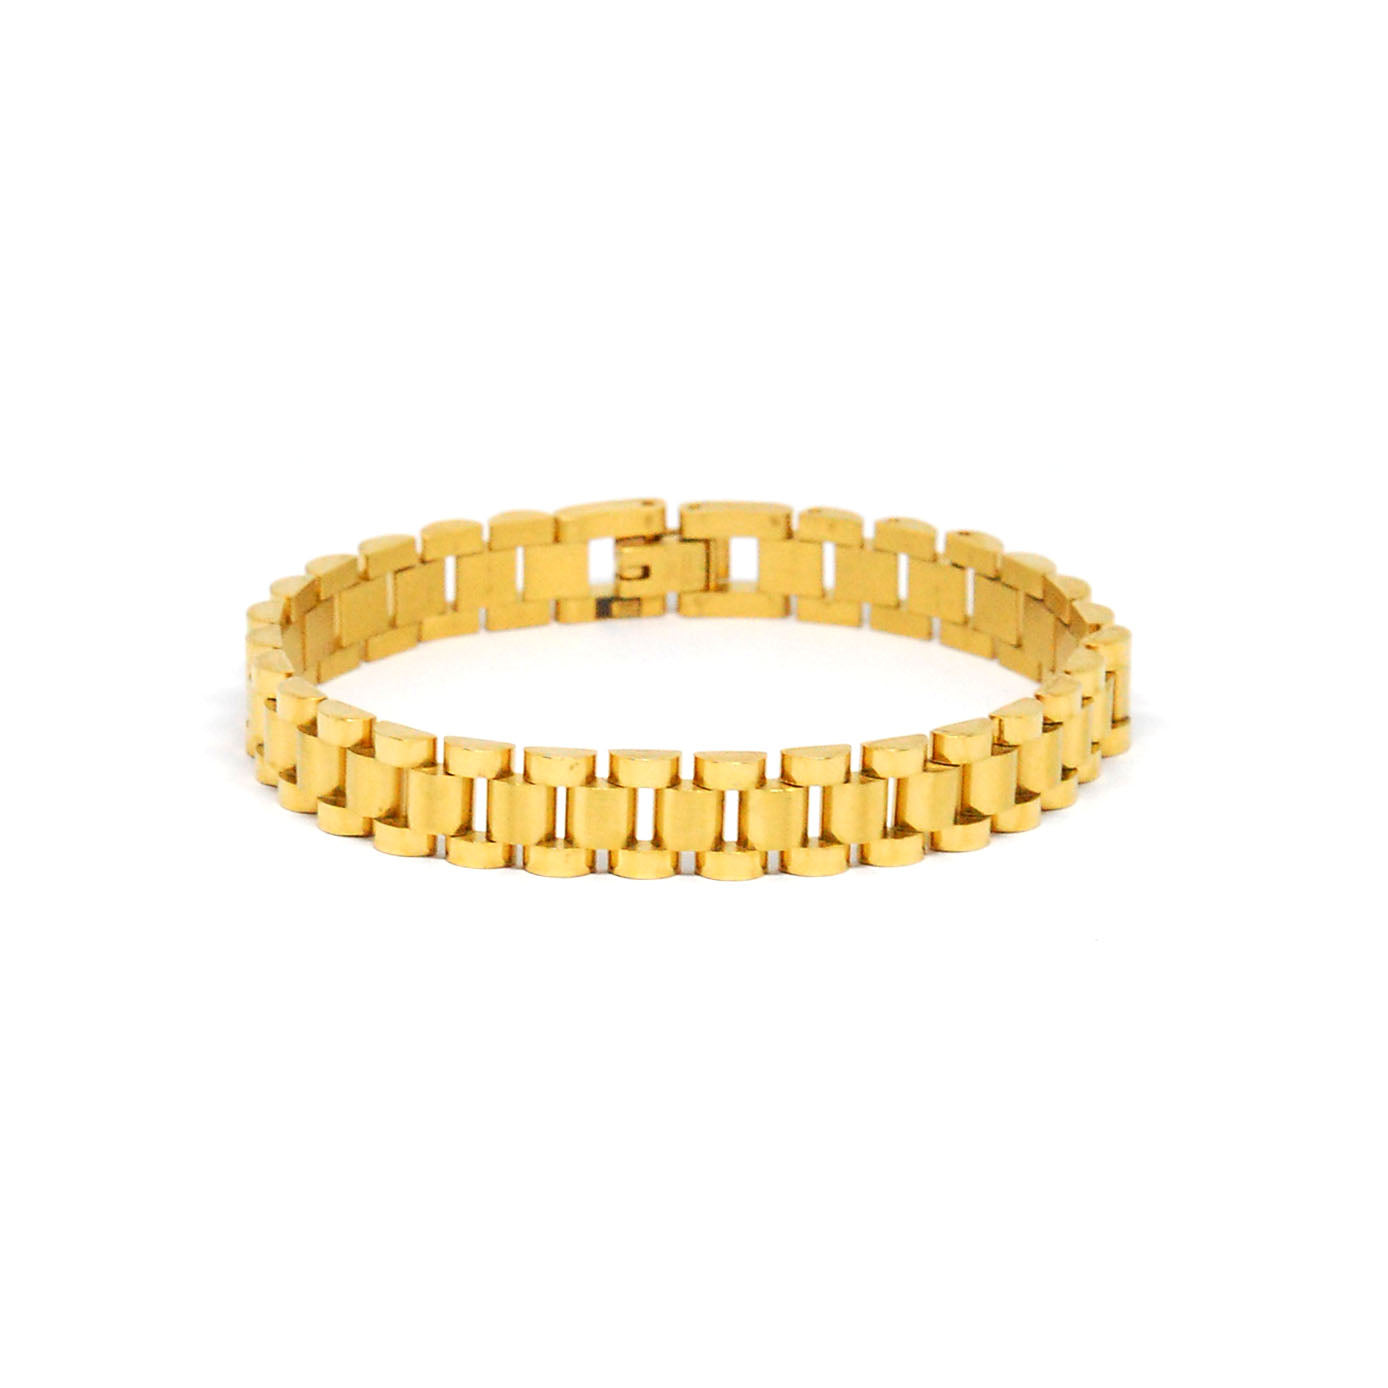 ESBL 7750: All Gold-Plated Rolex Bracelet (10mm)